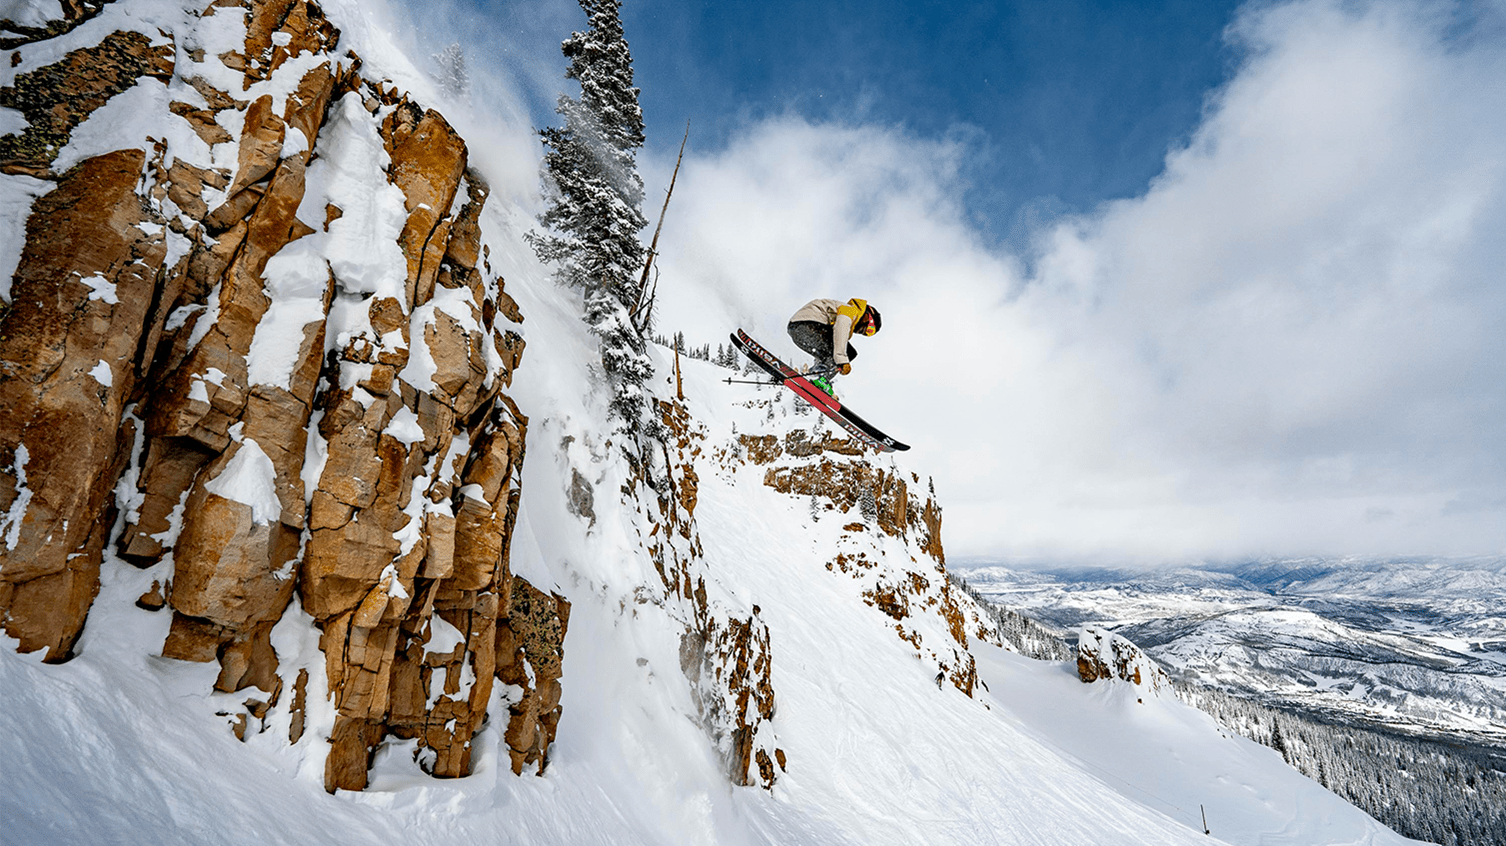 Skier jumps off cliff at Aspen Snowmass